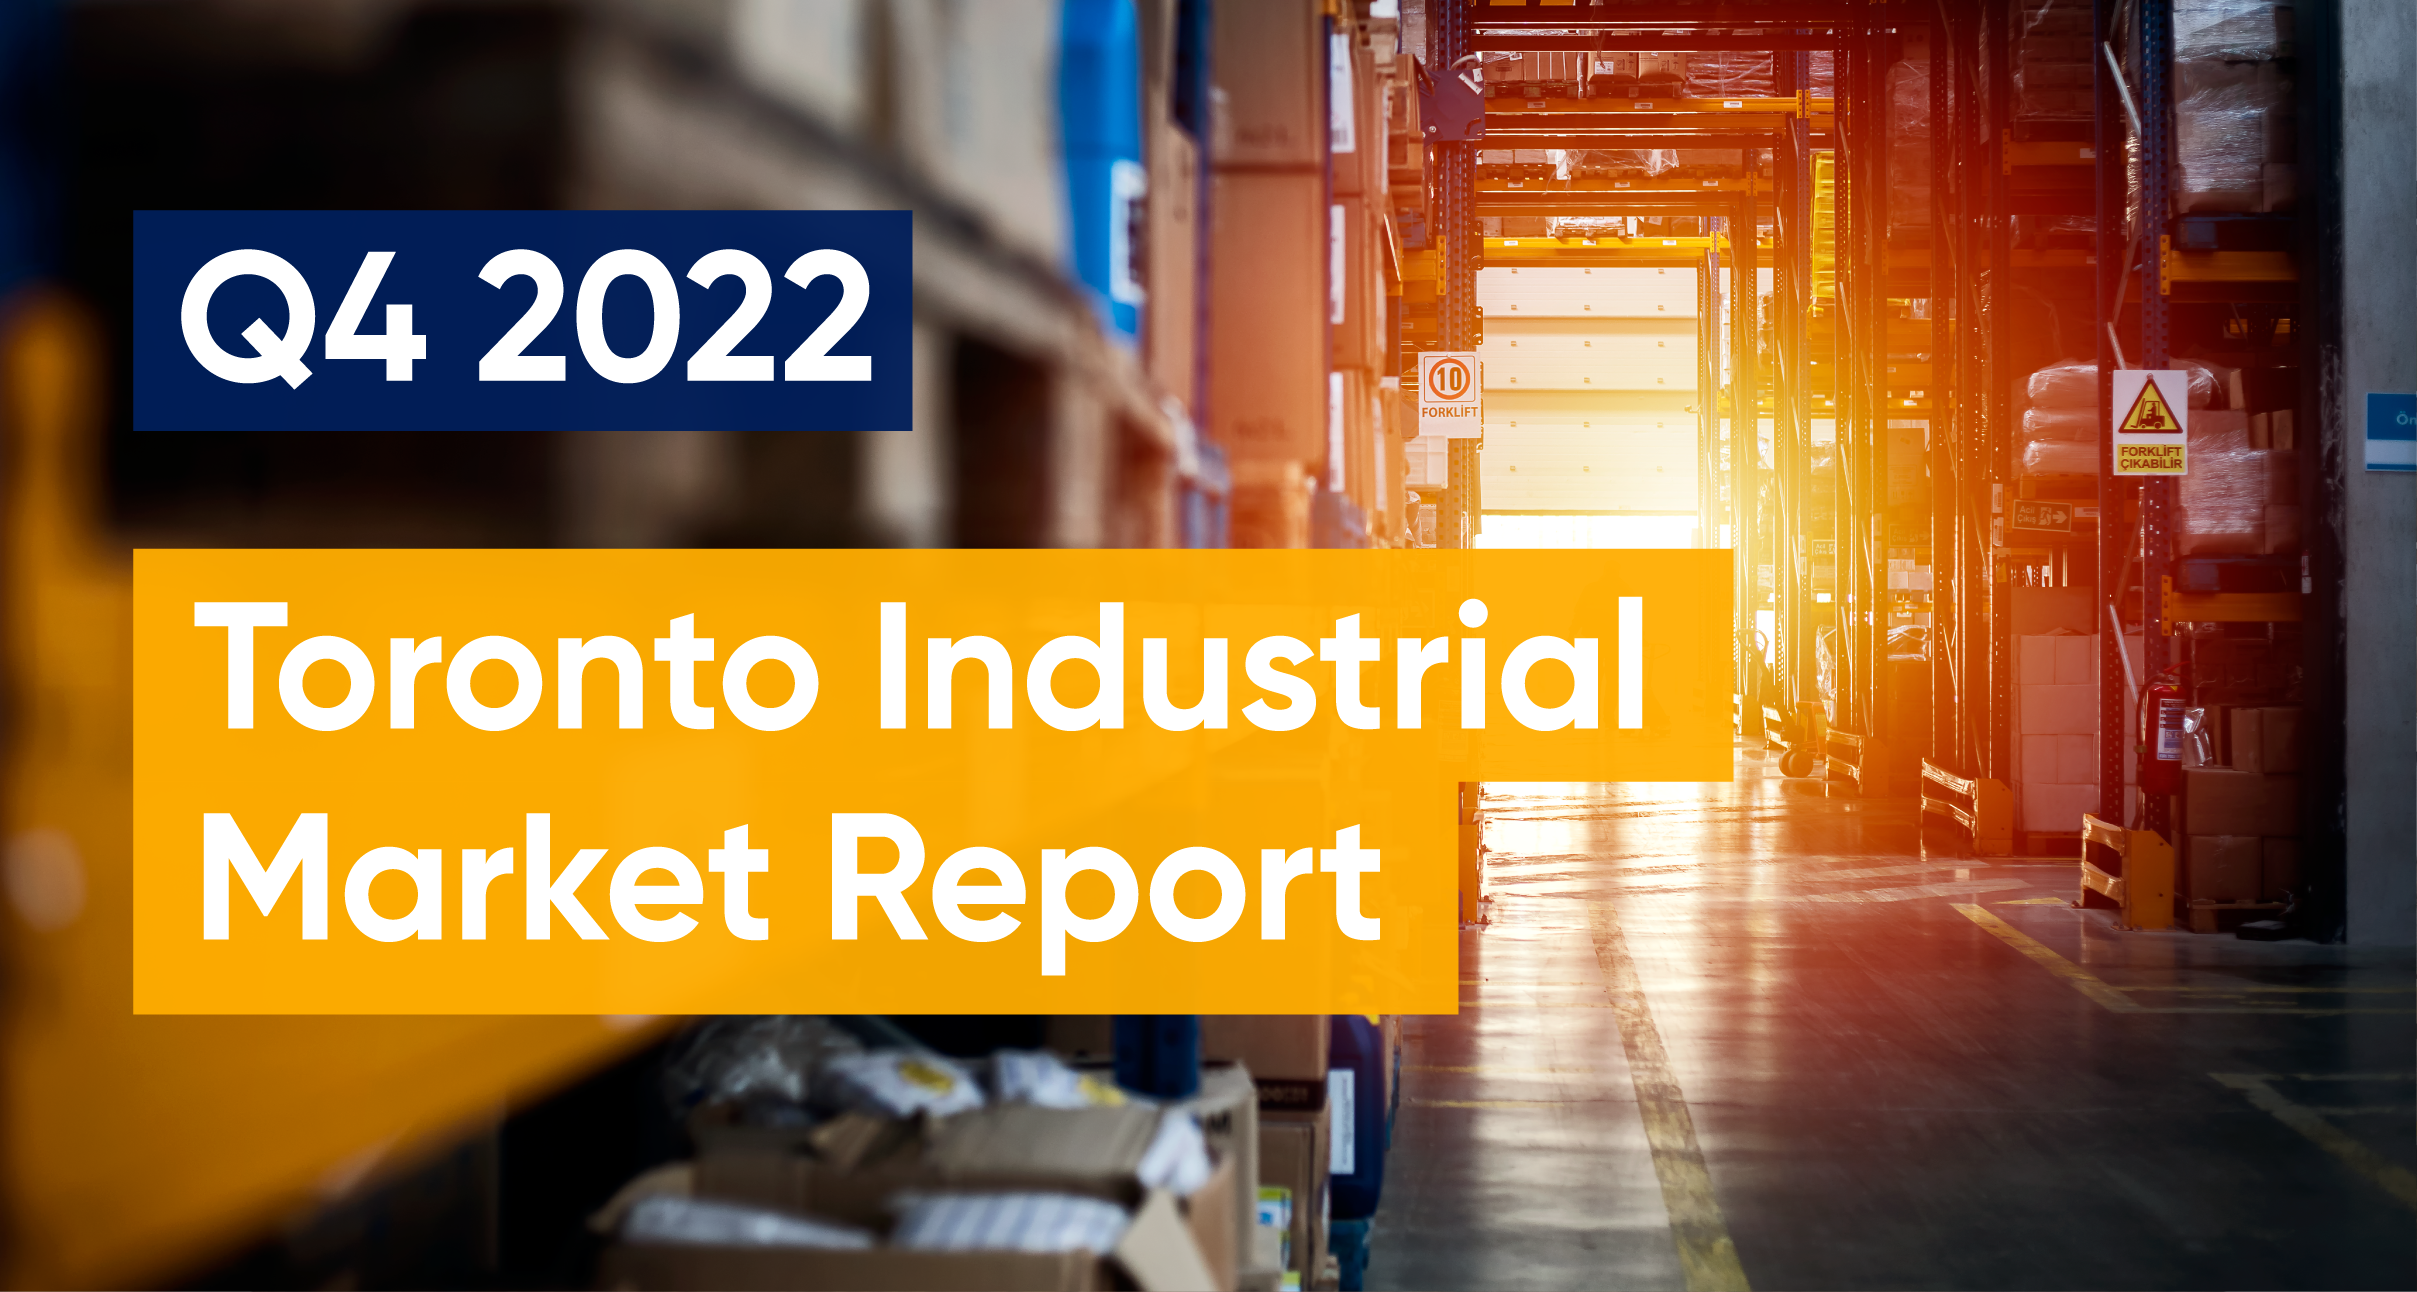 Q4 2022 Toronto Industrial Market Report